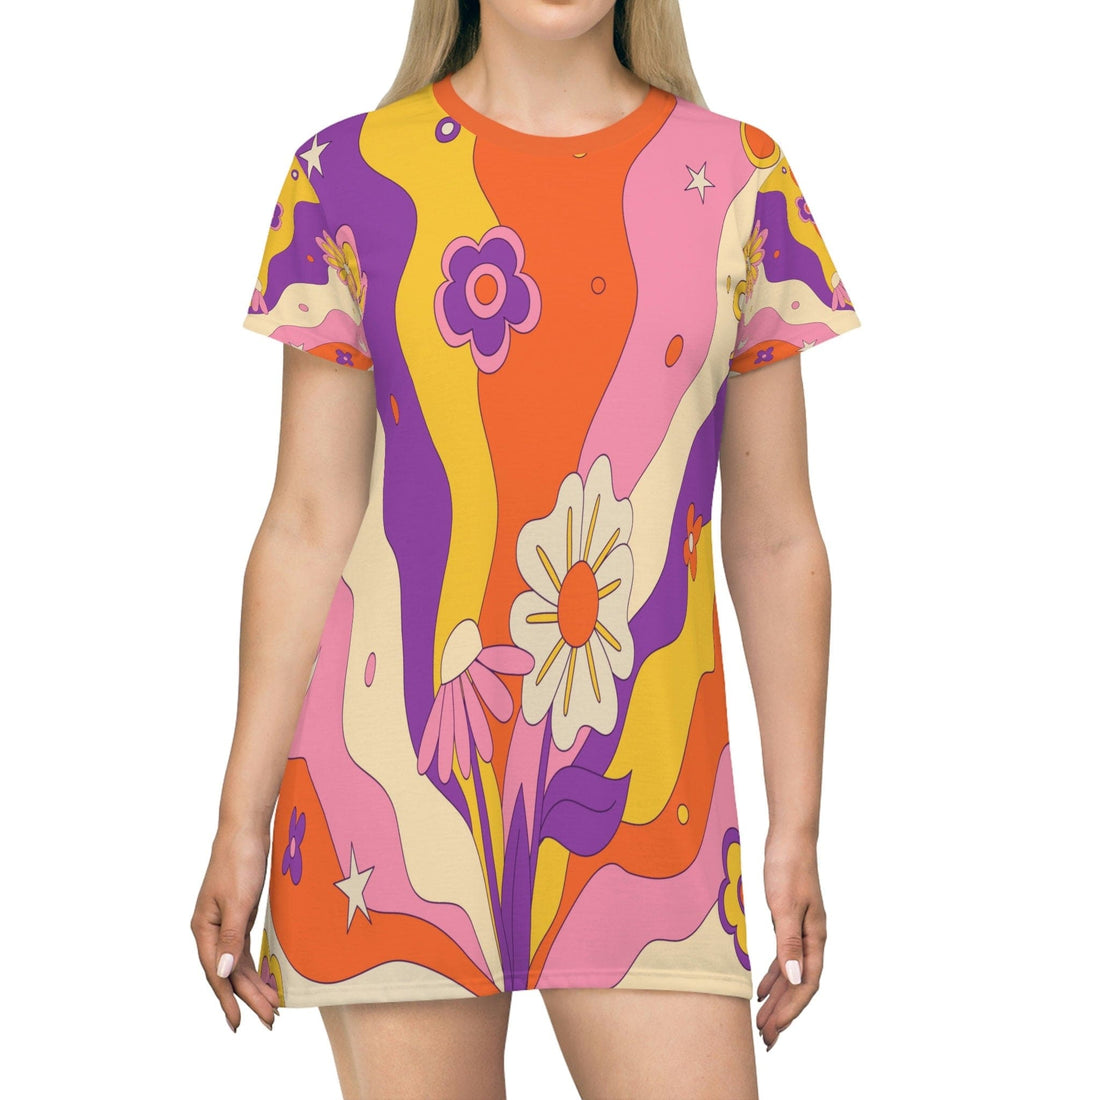 Kate McEnroe New York Retro 60s, 70s Groovy Hippie Flower Power Boho Party Dress in Mid Century Modern Beige, Burnt Orange, Mustard Yellow, Purple, PinkDresses28874908967916715646